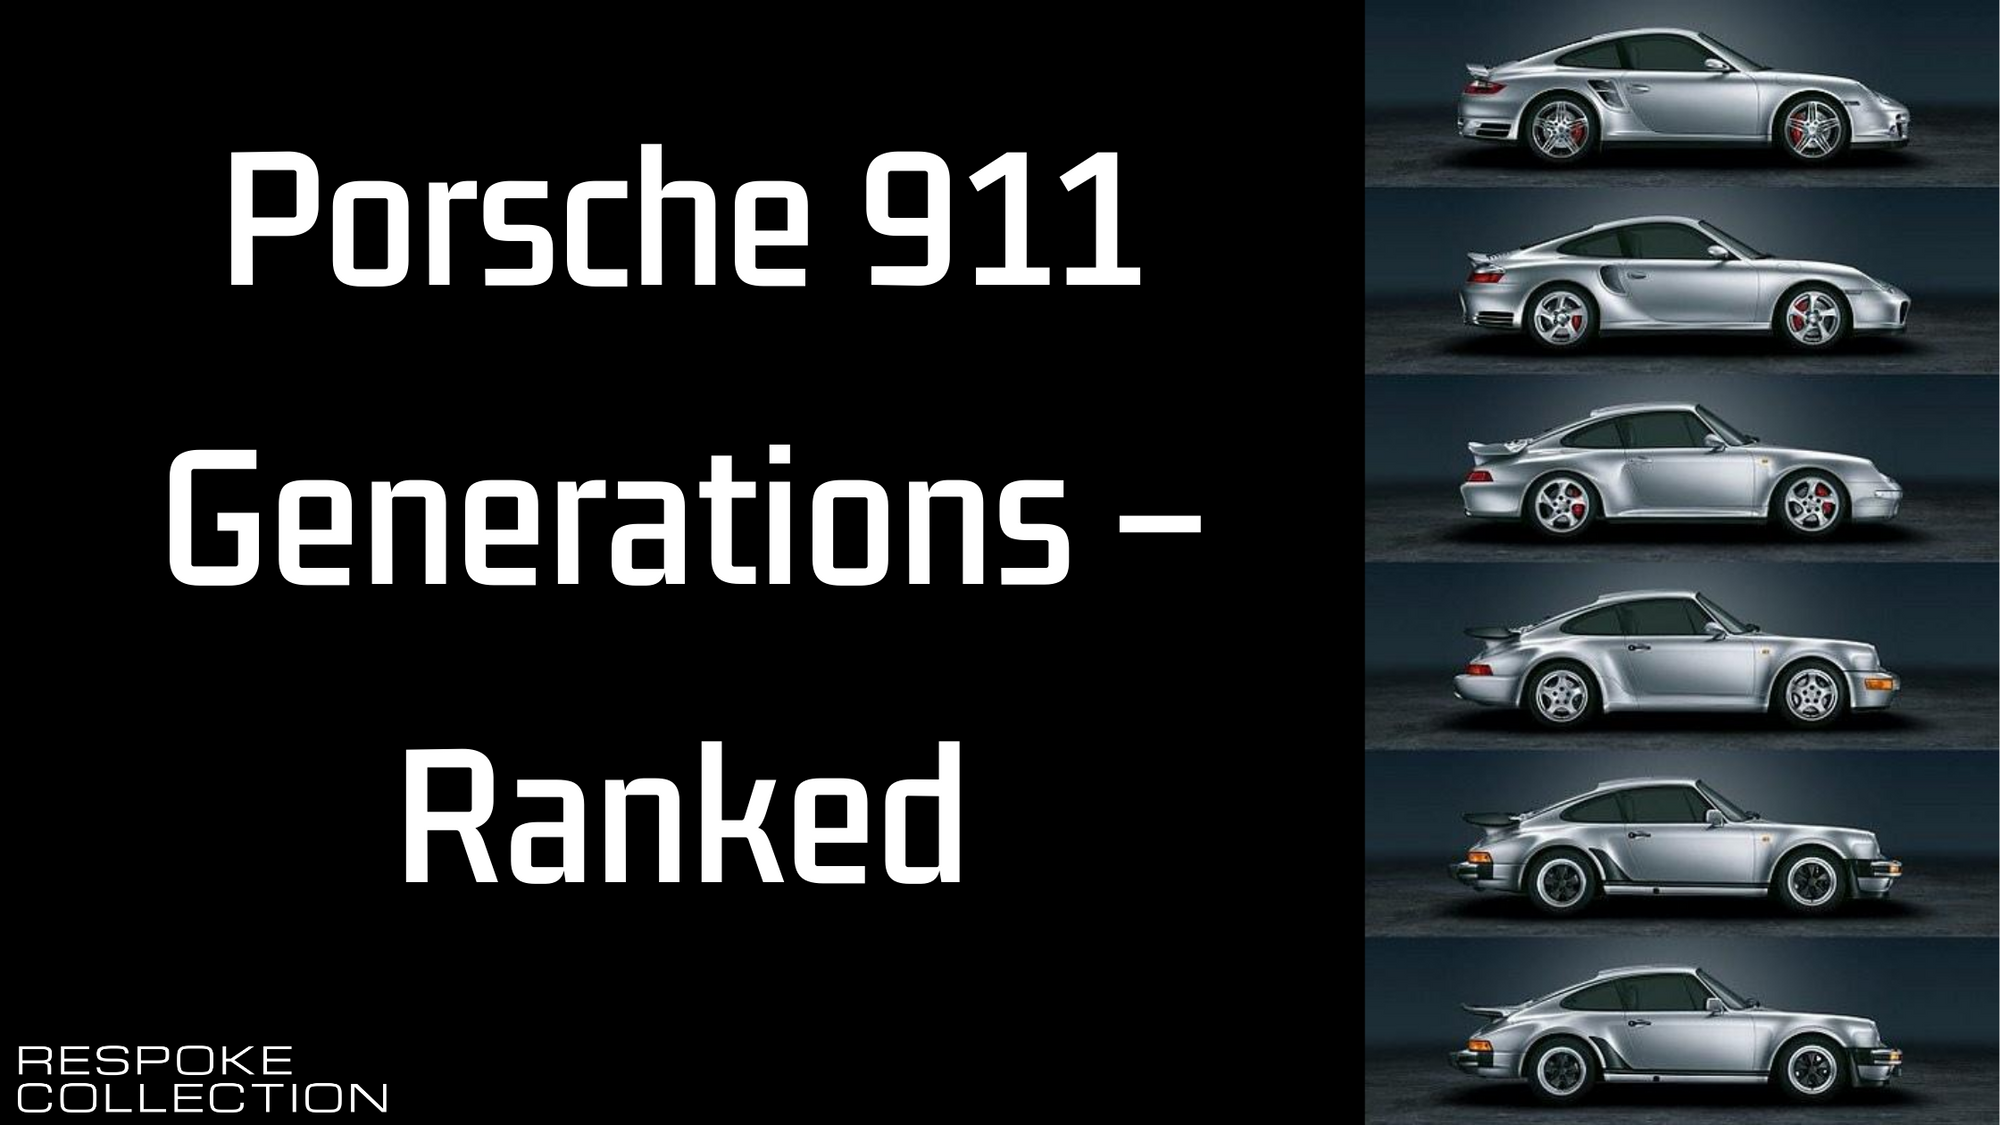 Porsche 911 Generations Ranked - Respoke